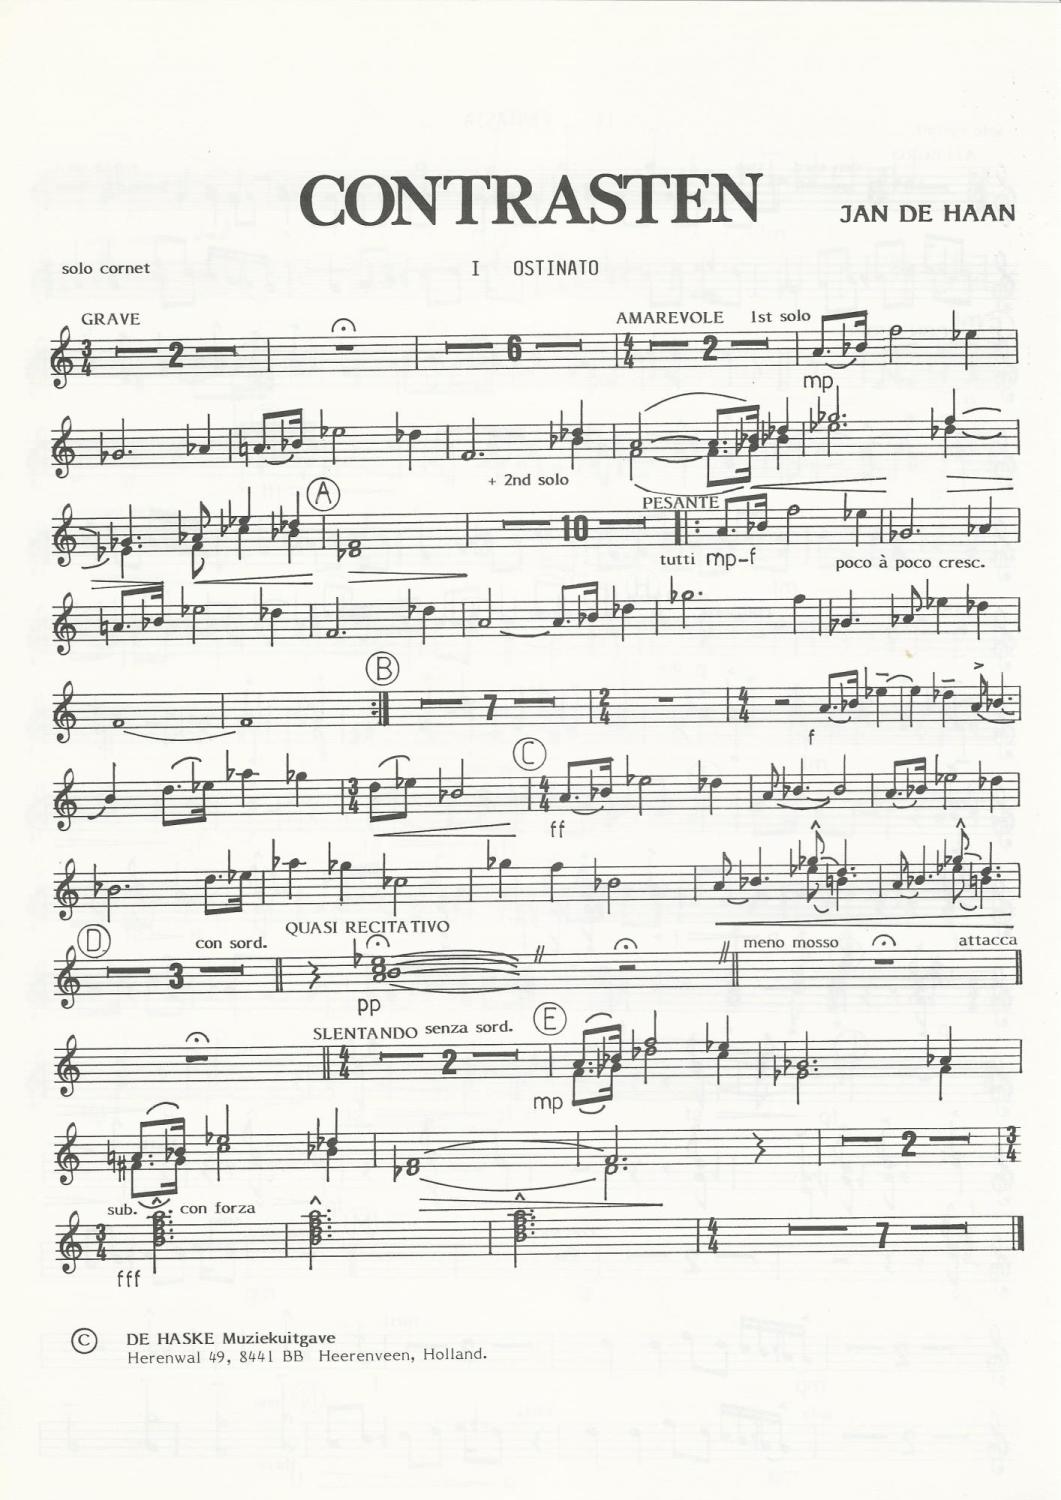 Contrasten for Brass Band (Parts Only) - Jan de Haan - NO SCORE